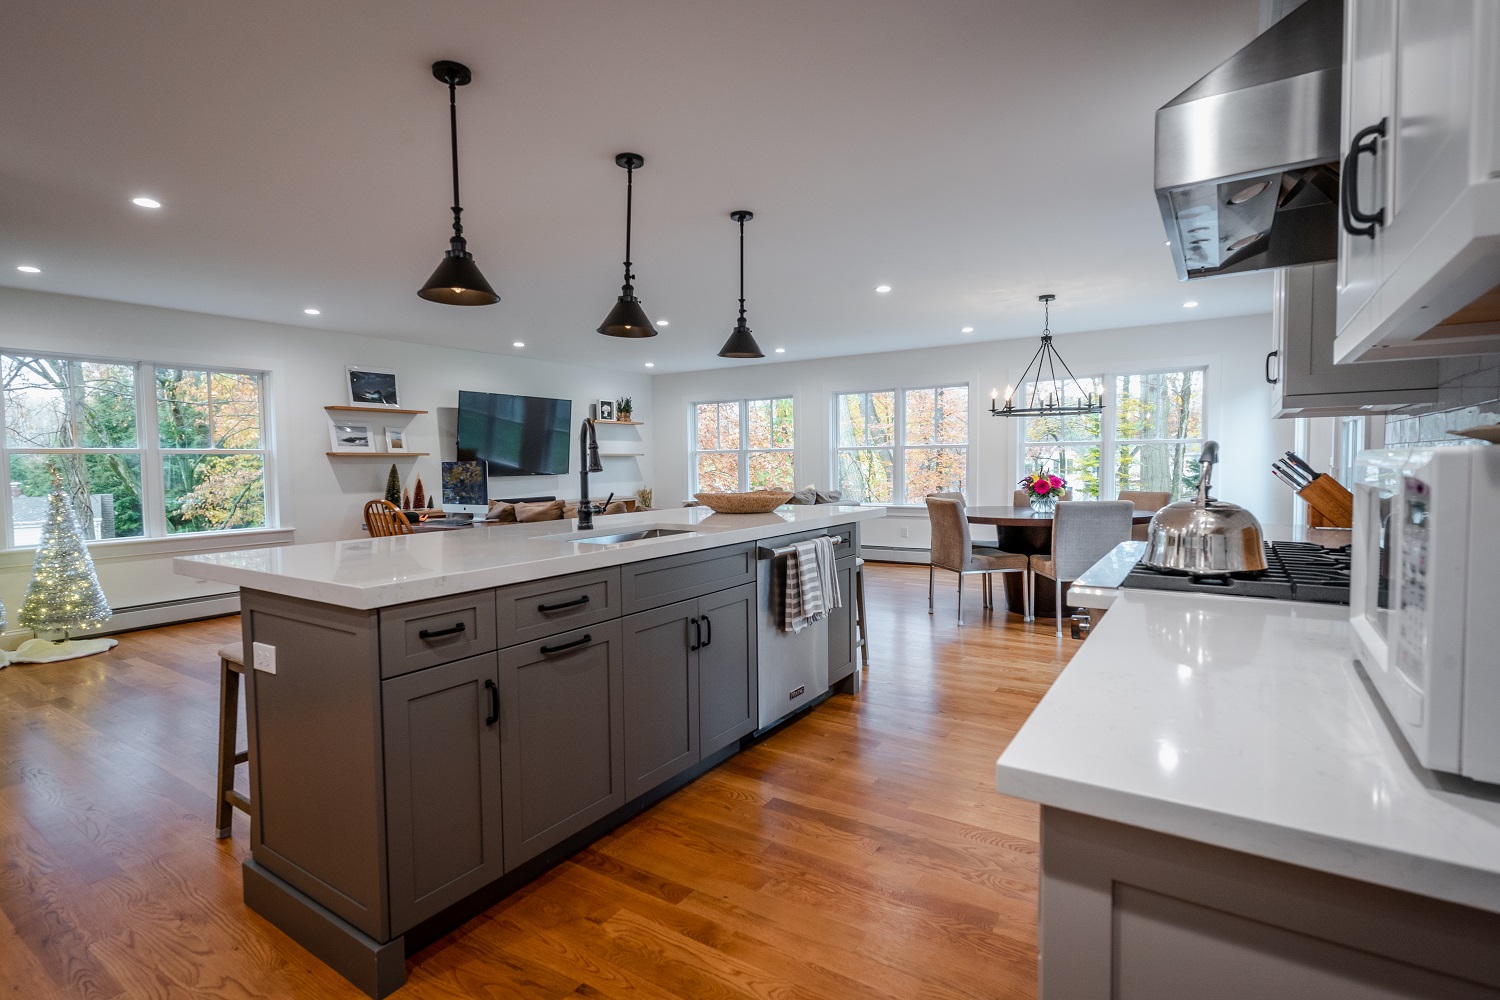 Kitchen Design and Build Services by American Granite Designs, Inc.